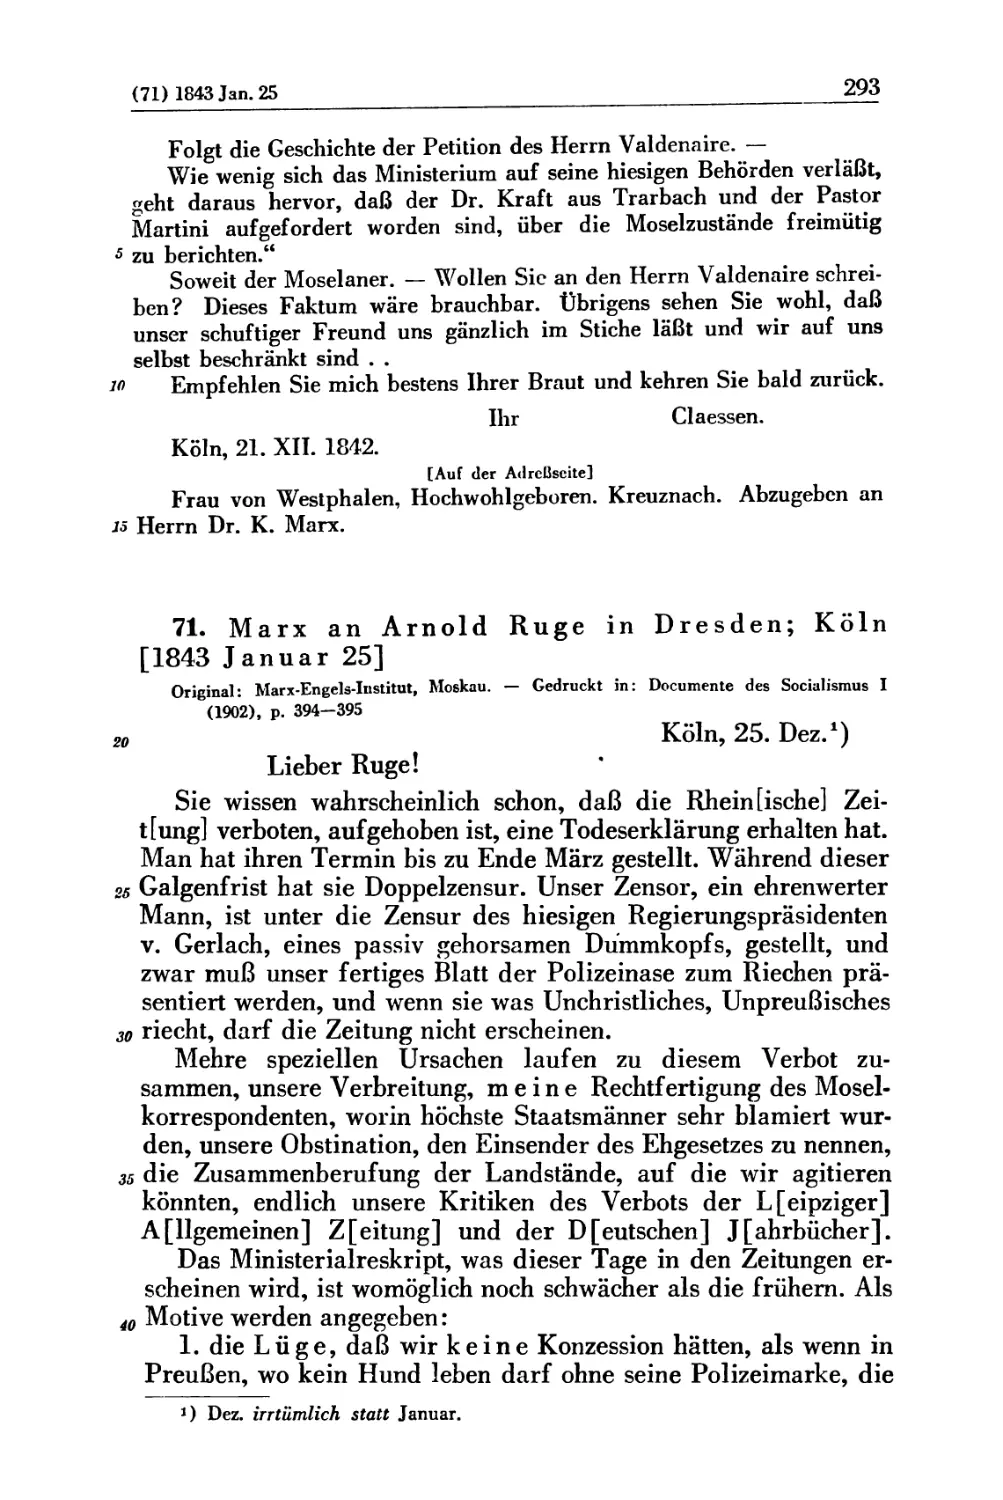 71. Marx an Arnold Ruge in Dresden; Köln [1843 Januar 25]